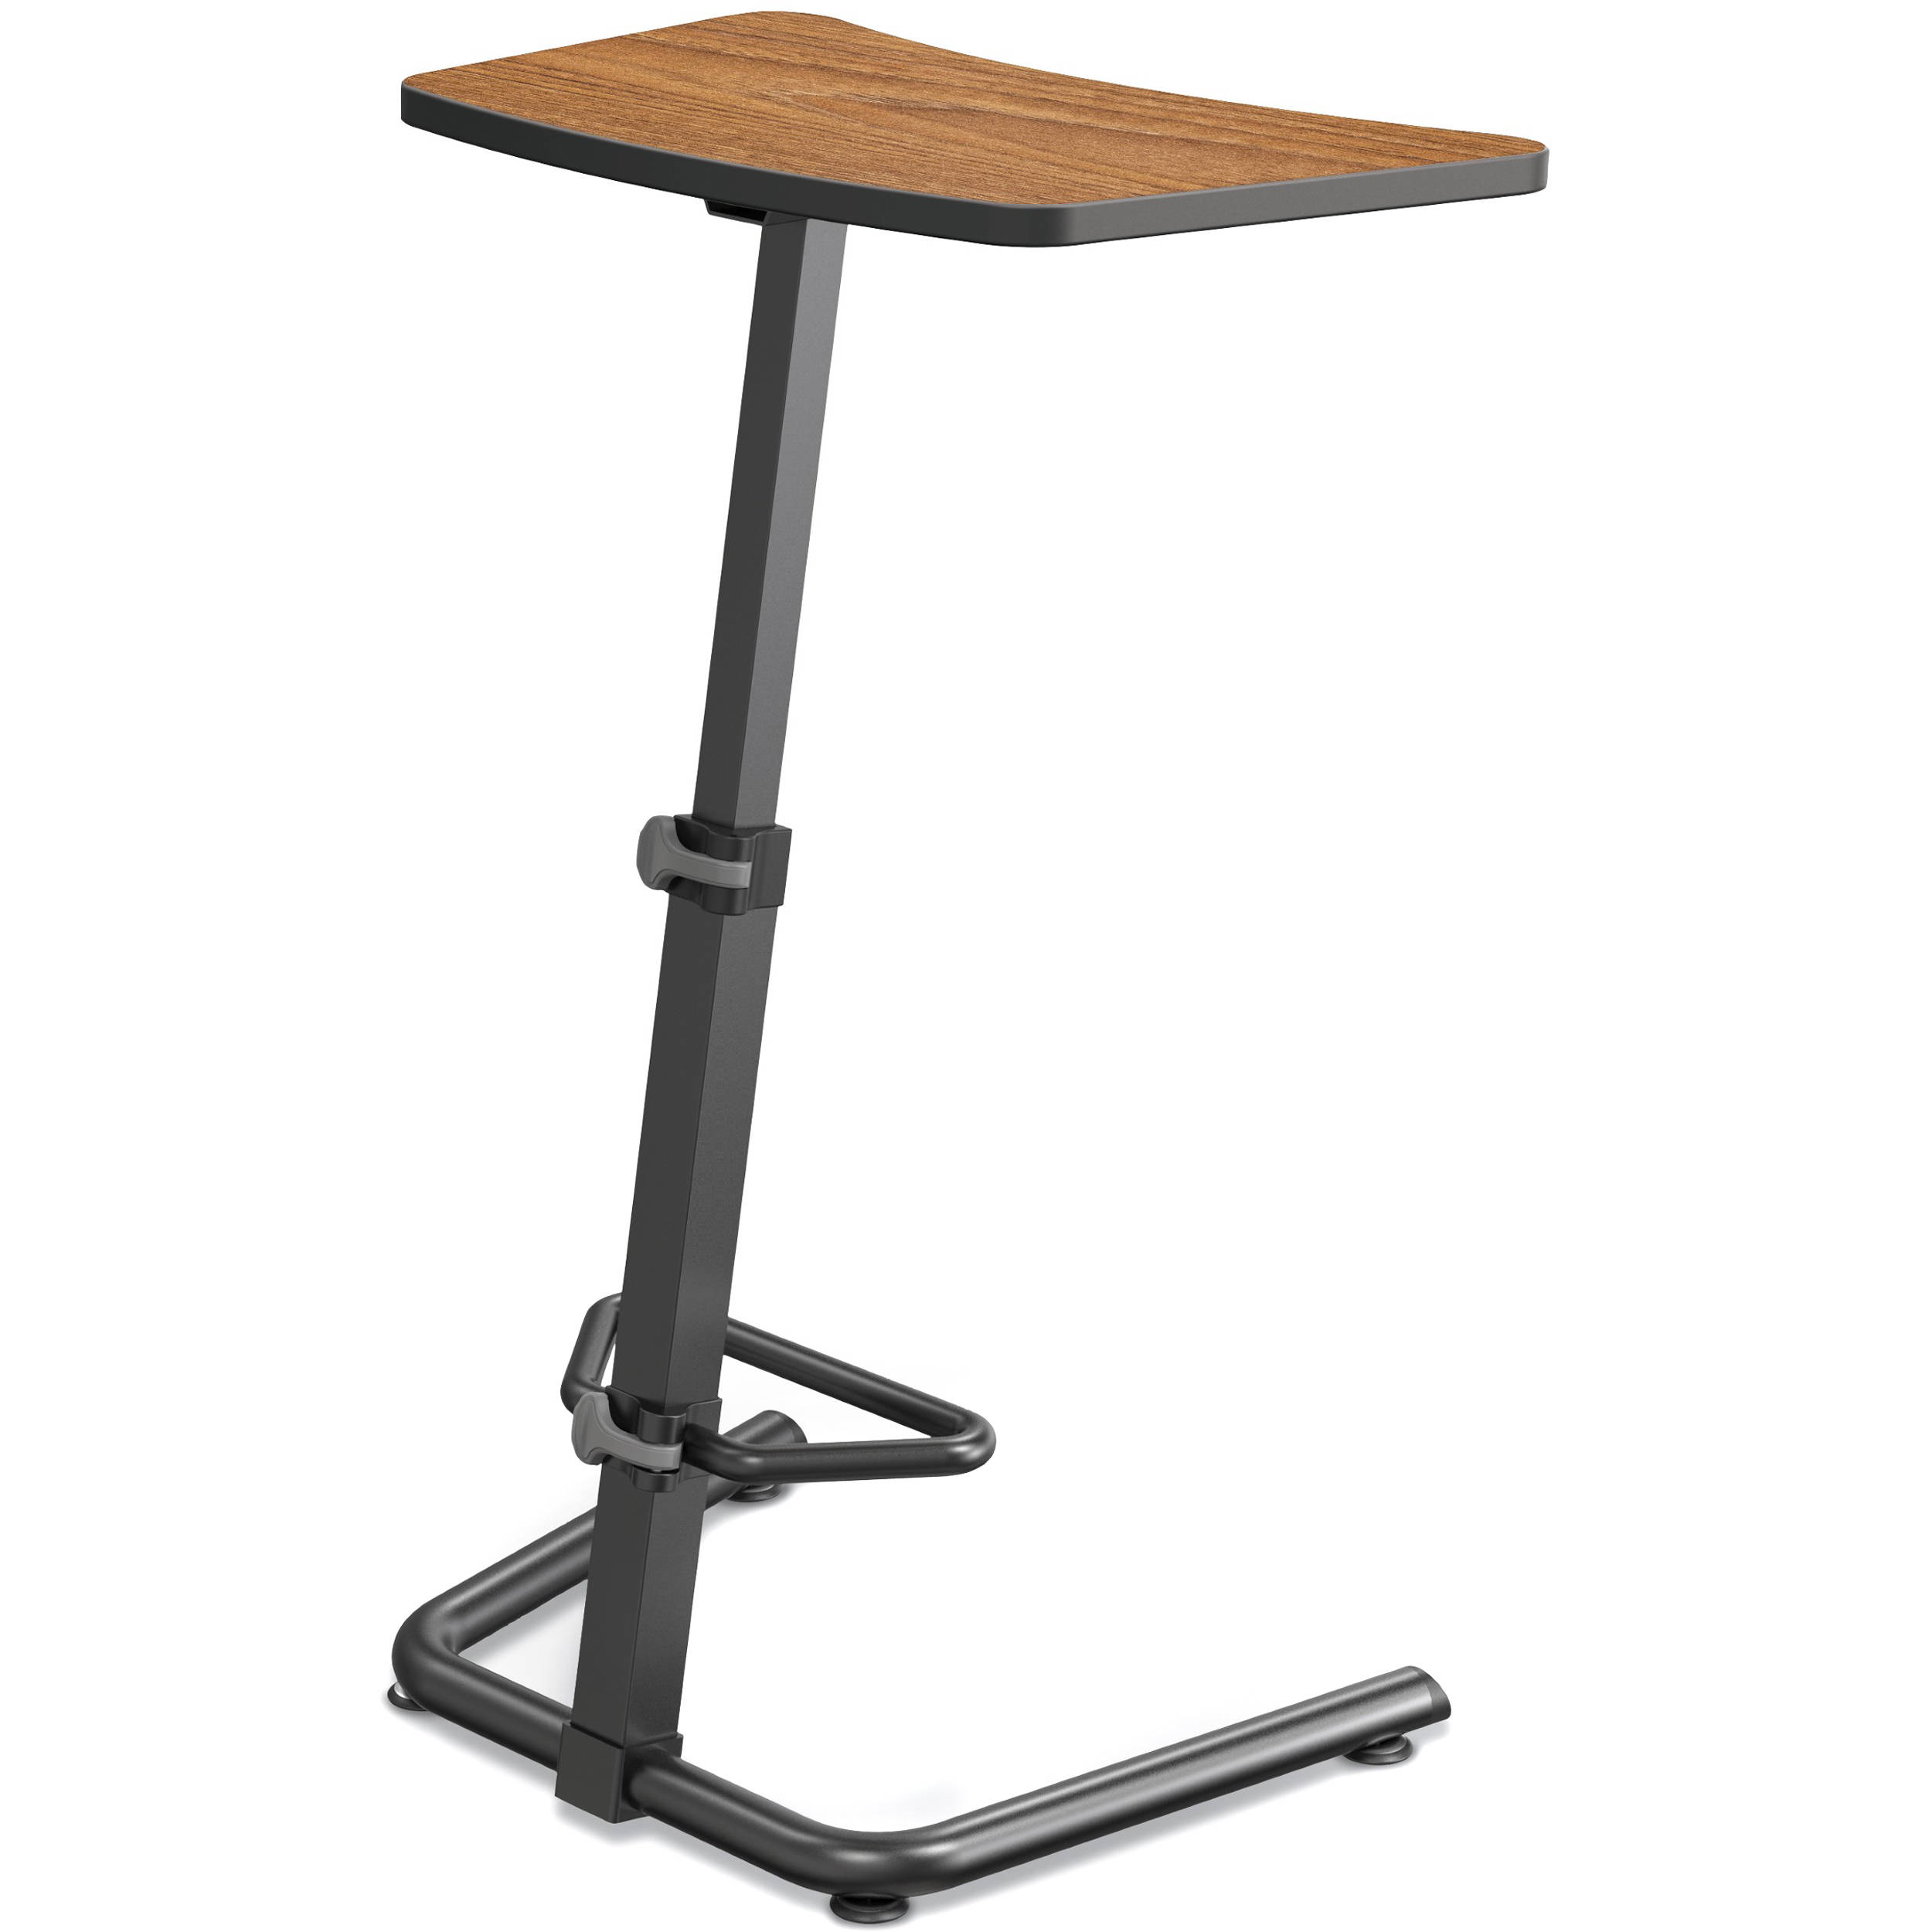 Balt Up Rite Height Adjustable Sit Stand Desk 90532 7209 Bk B H